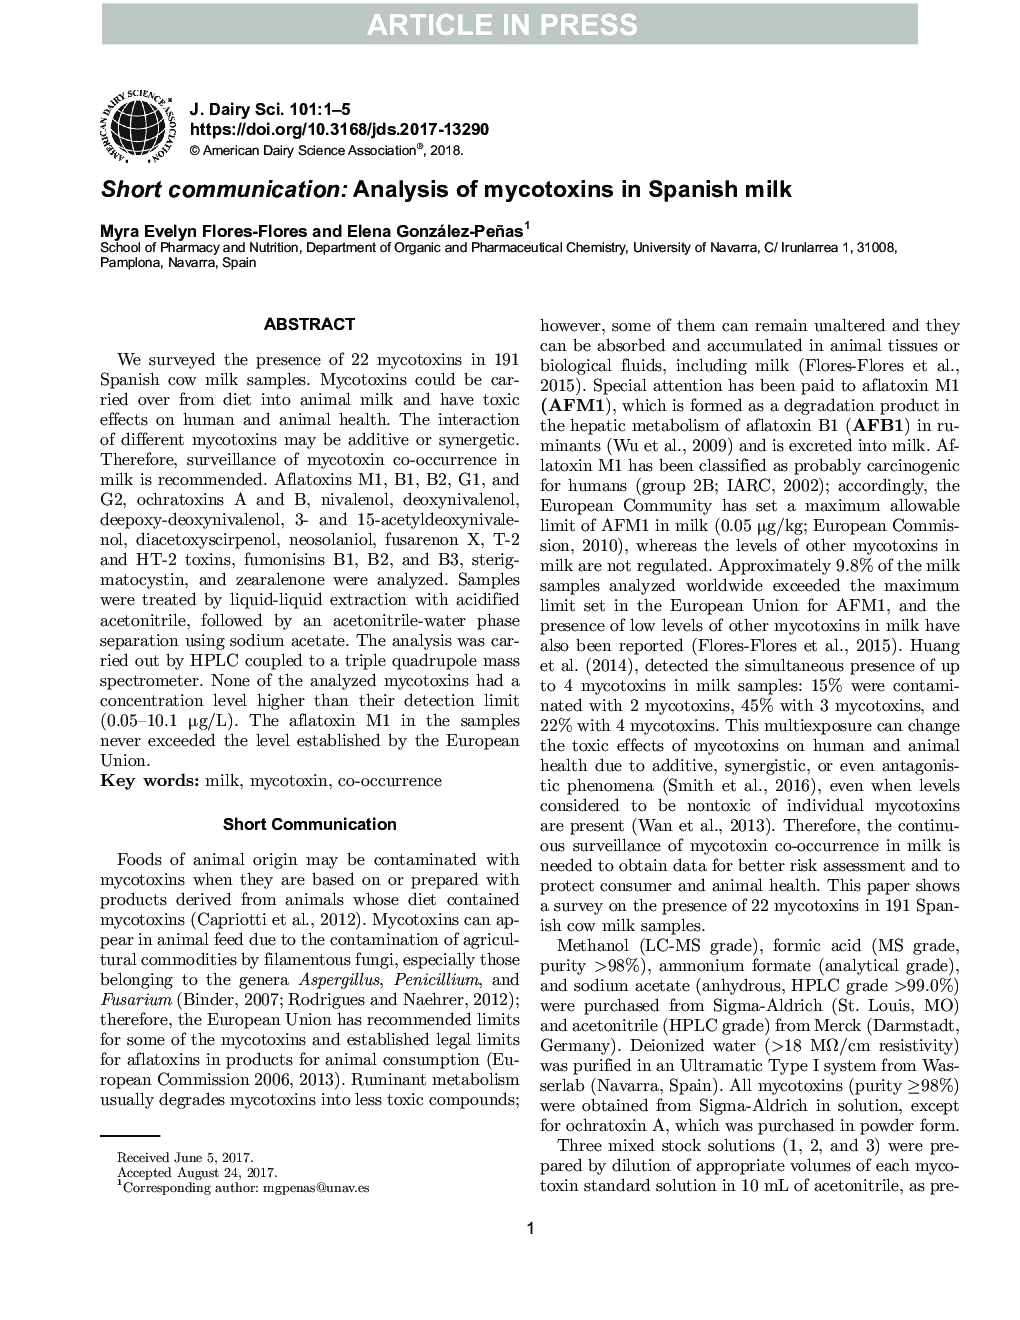 Short communication: Analysis of mycotoxins in Spanish milk